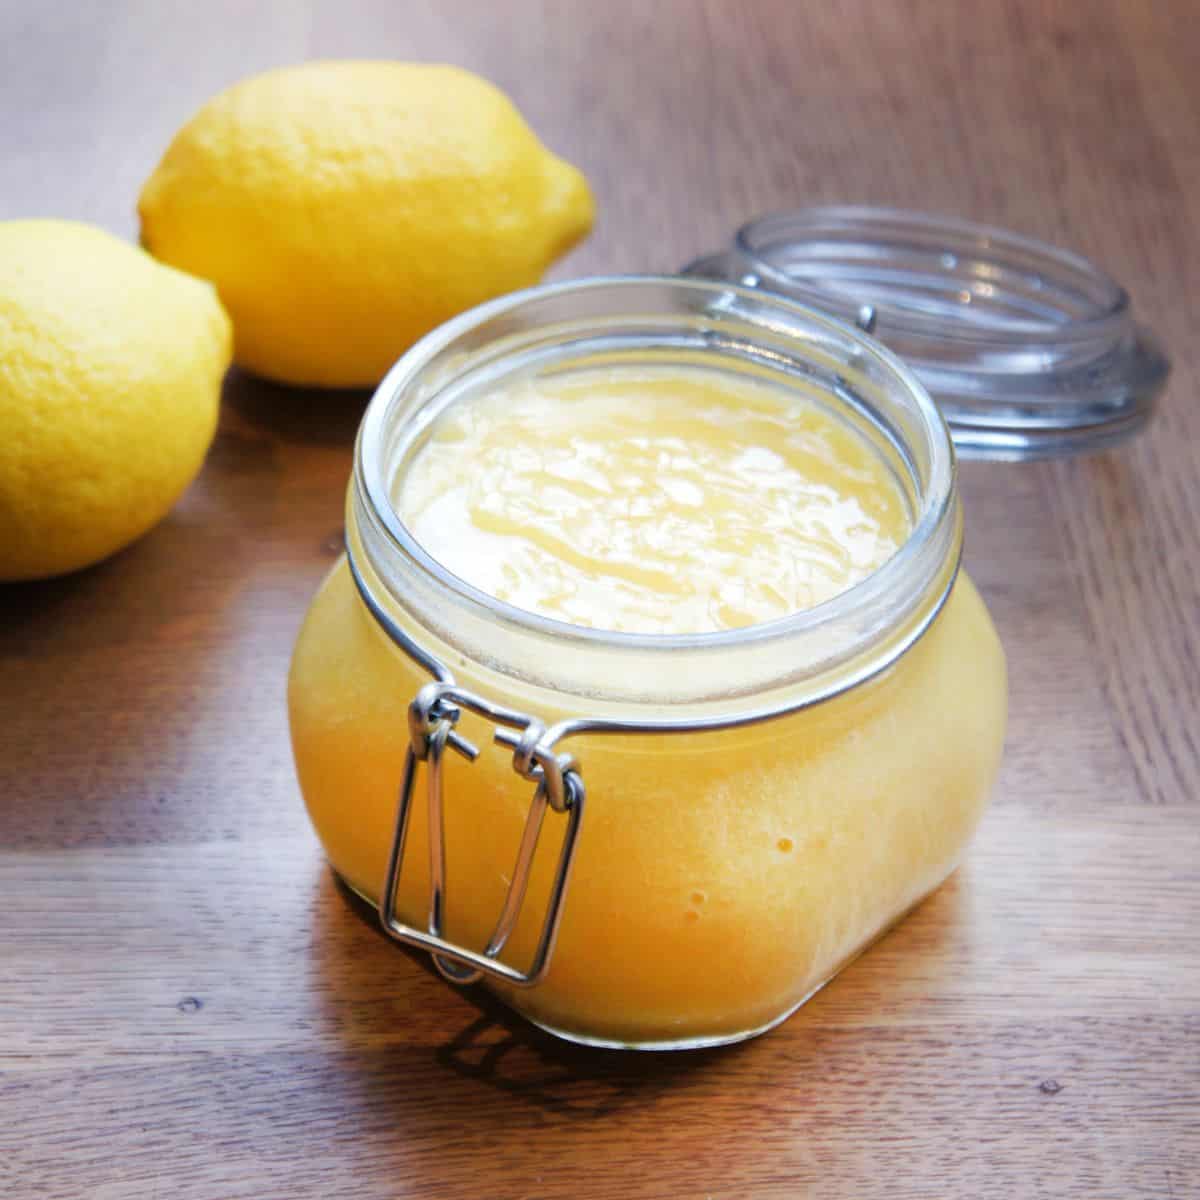 6-ingredient Lemon Curd Recipe: Easy to make at home